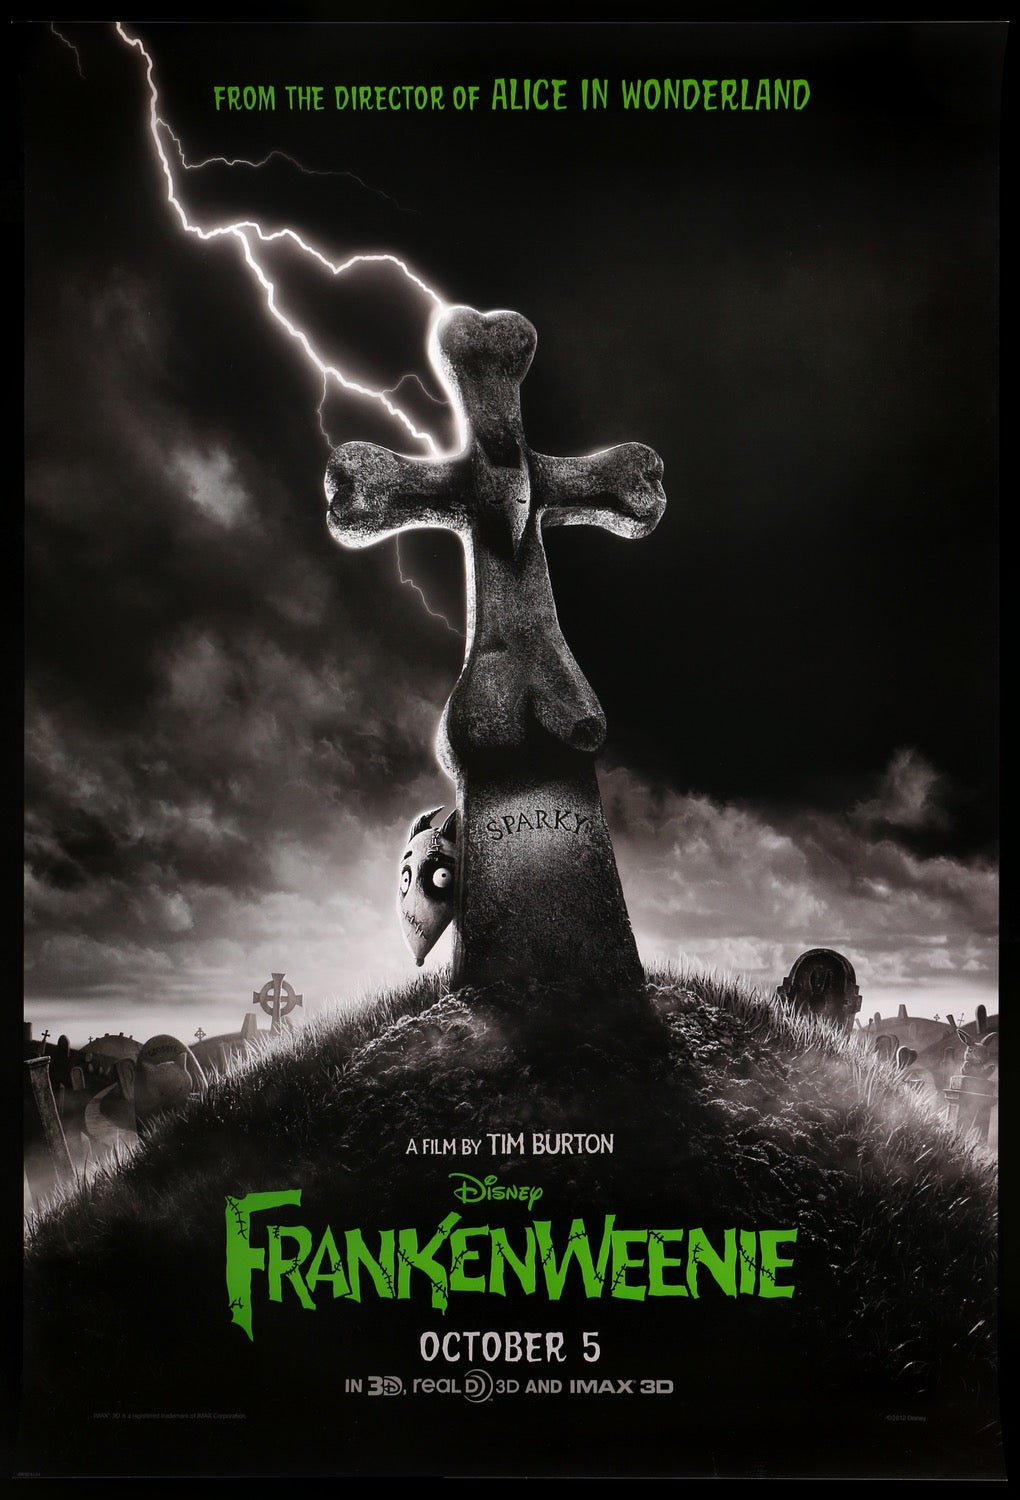 Frankenweenie (2012) original movie poster for sale at Original Film Art